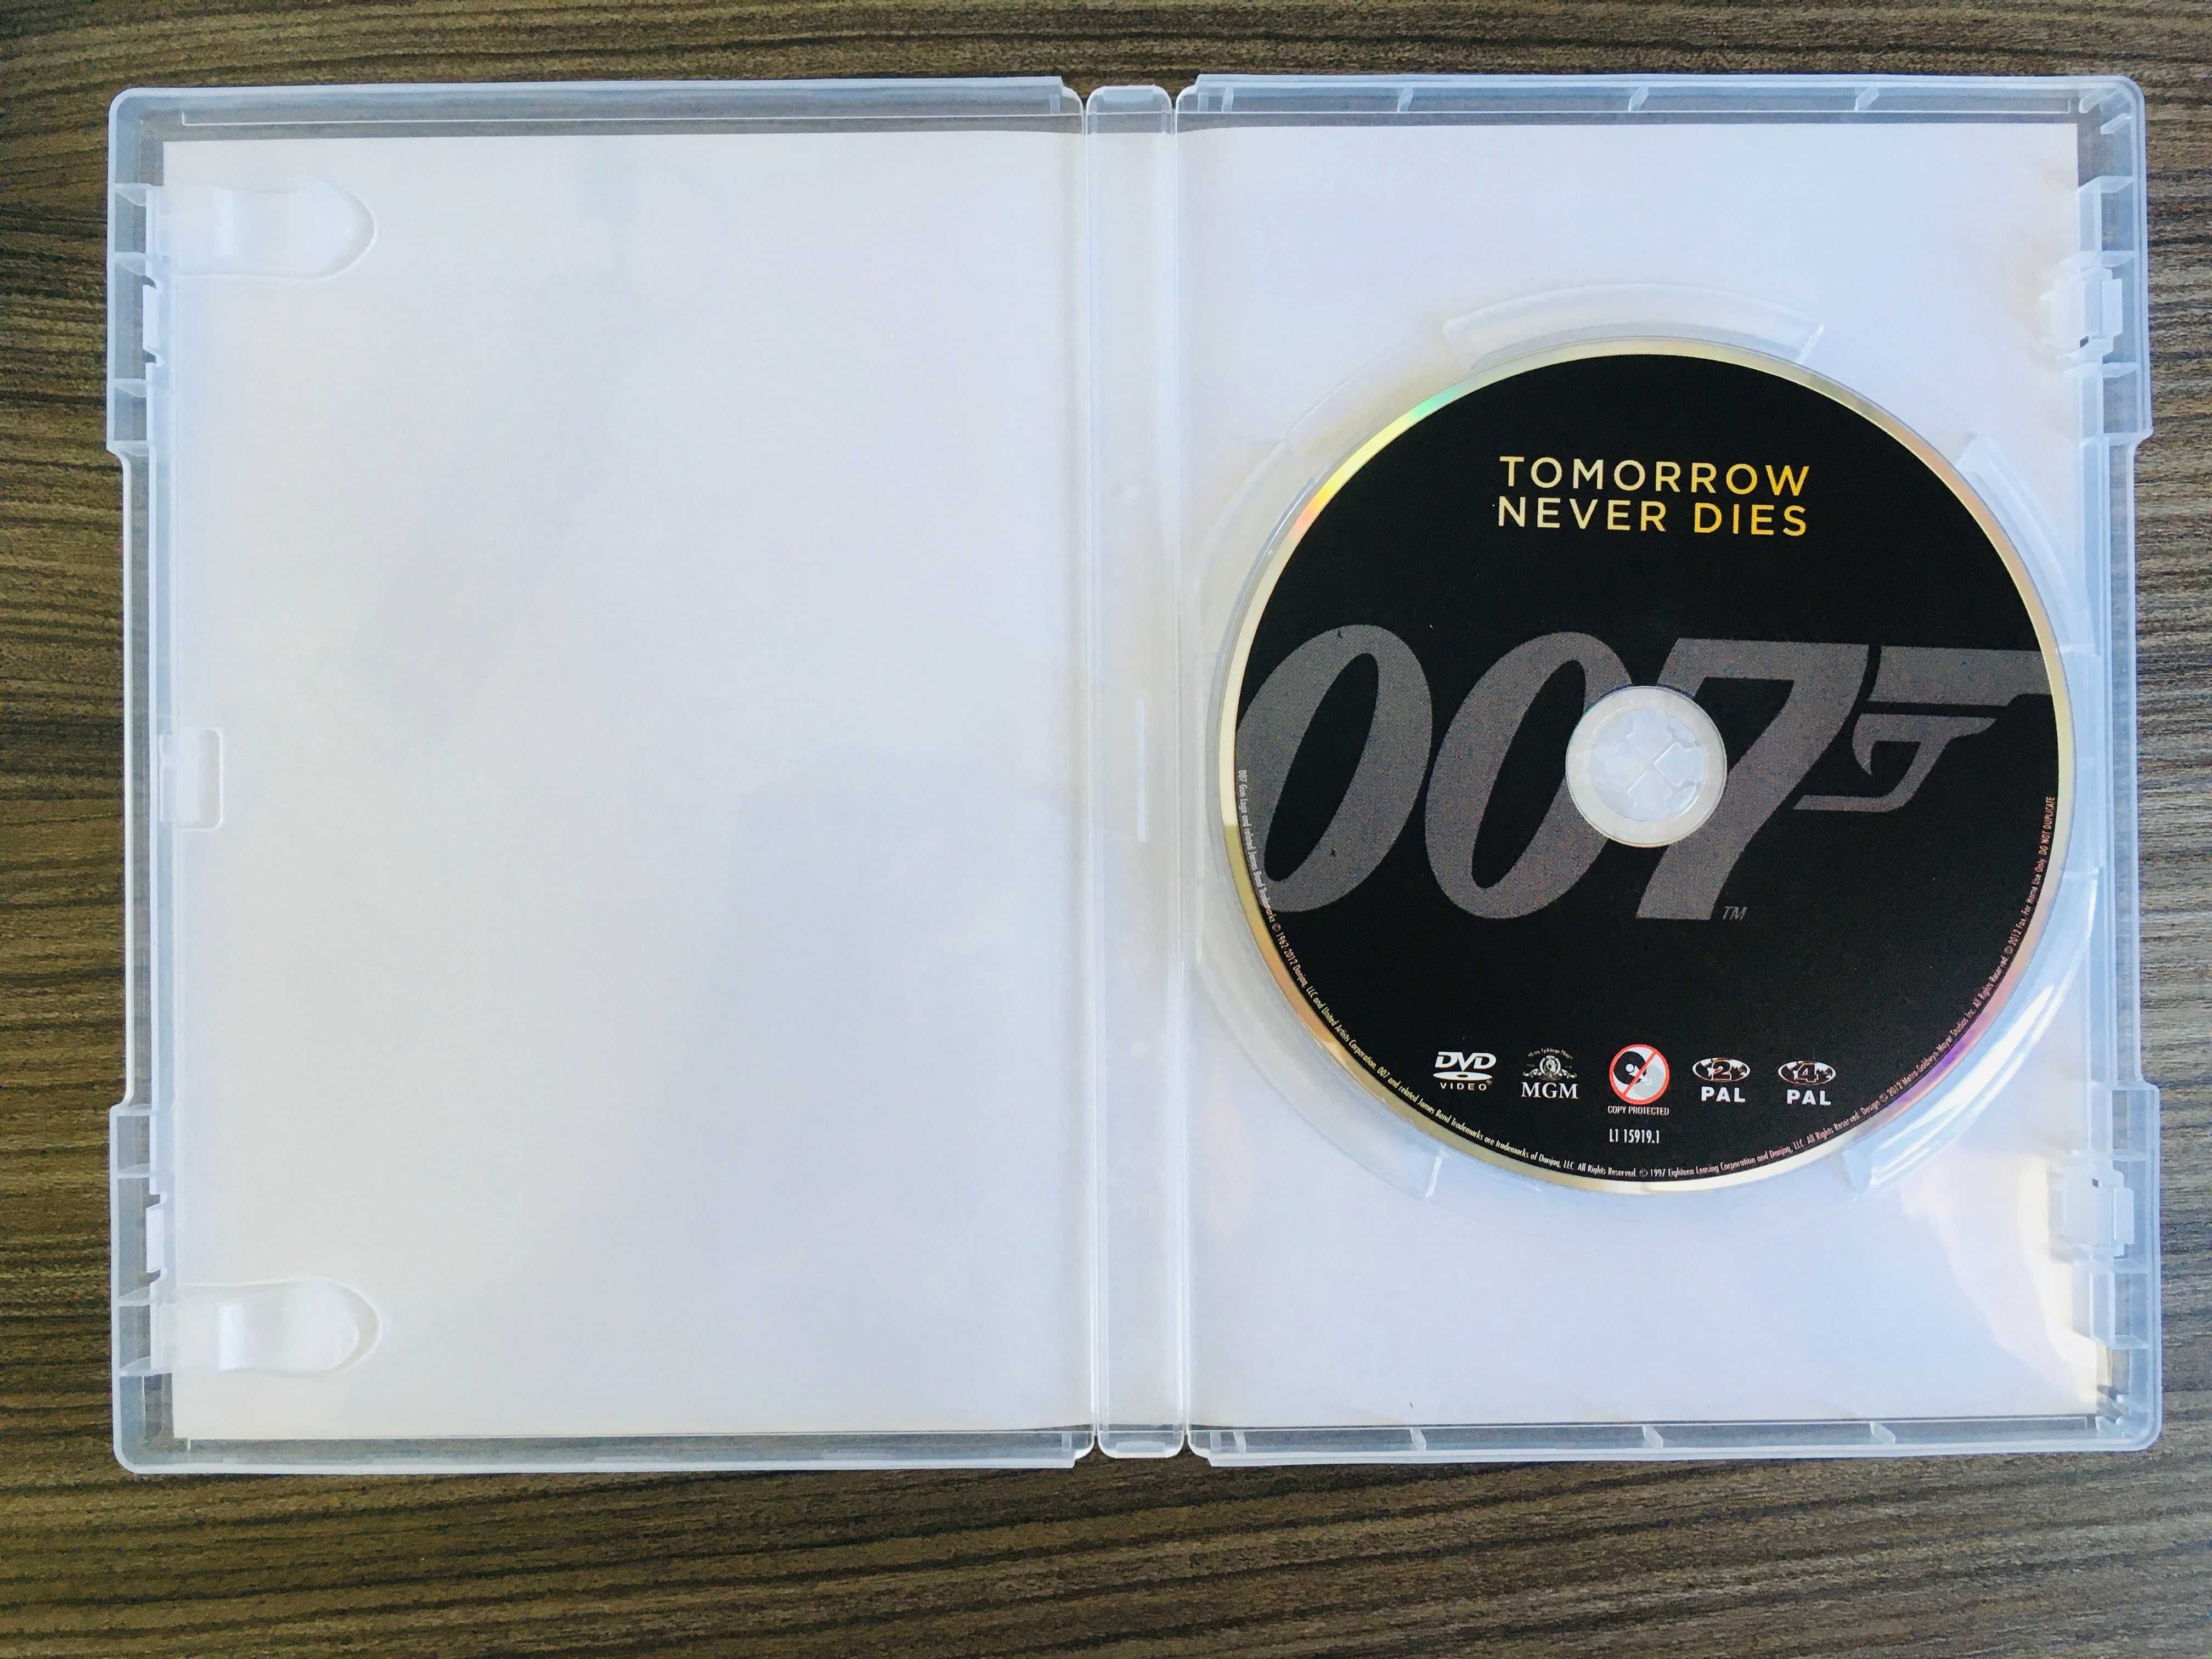 Jutro nie umiera nigdy (Tomorrow Never Dies, Pierce Brosnan, 007, DVD)